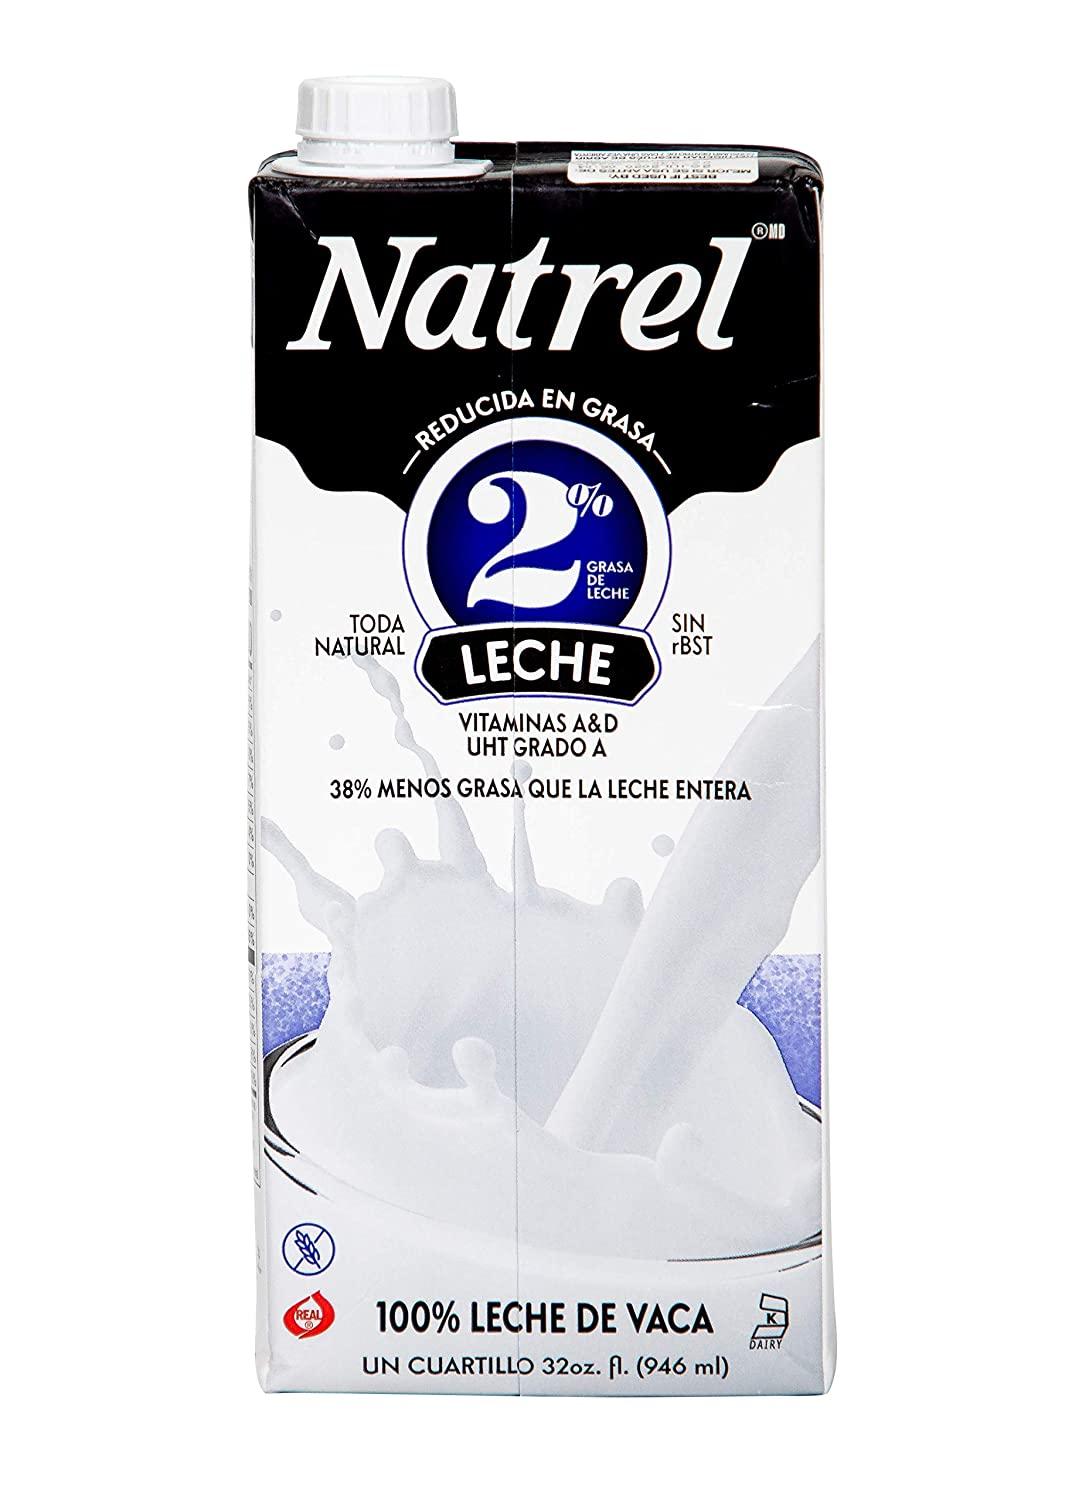 Natrel Lactose Free Skim